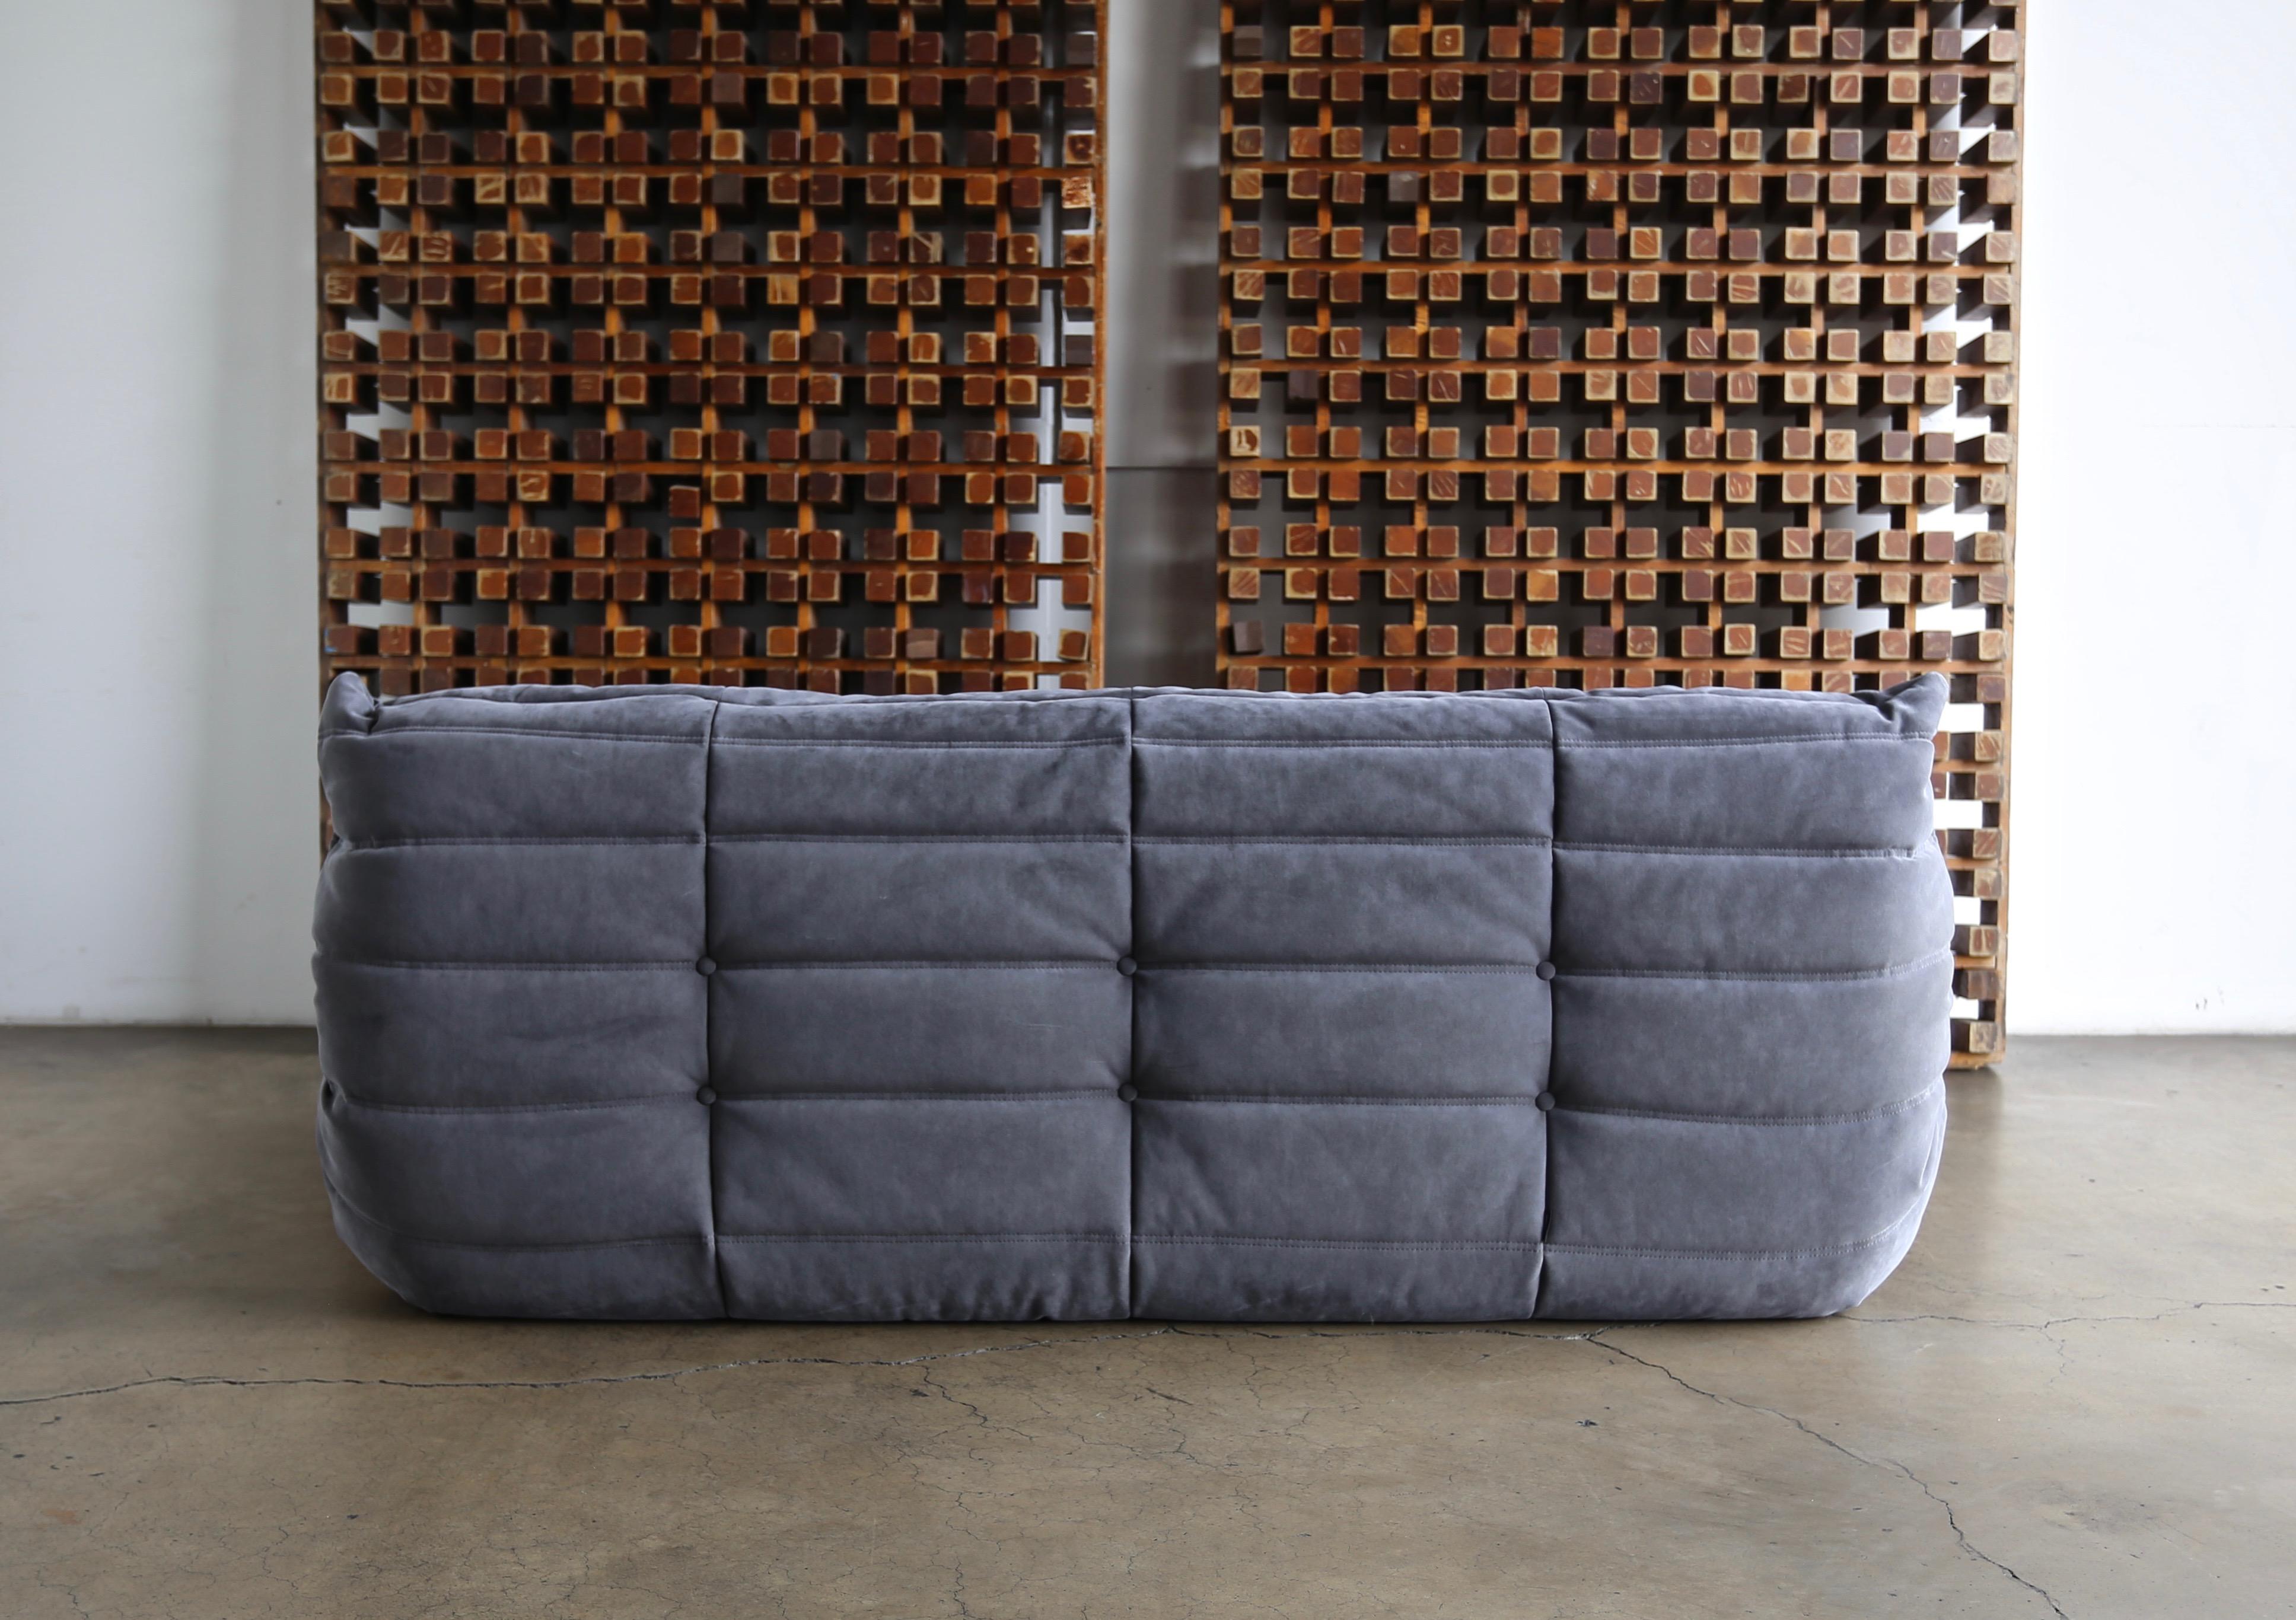 Michel Ducaroy Modular Togo sofa set for Ligne Roset. This sofa set retains its original labels.